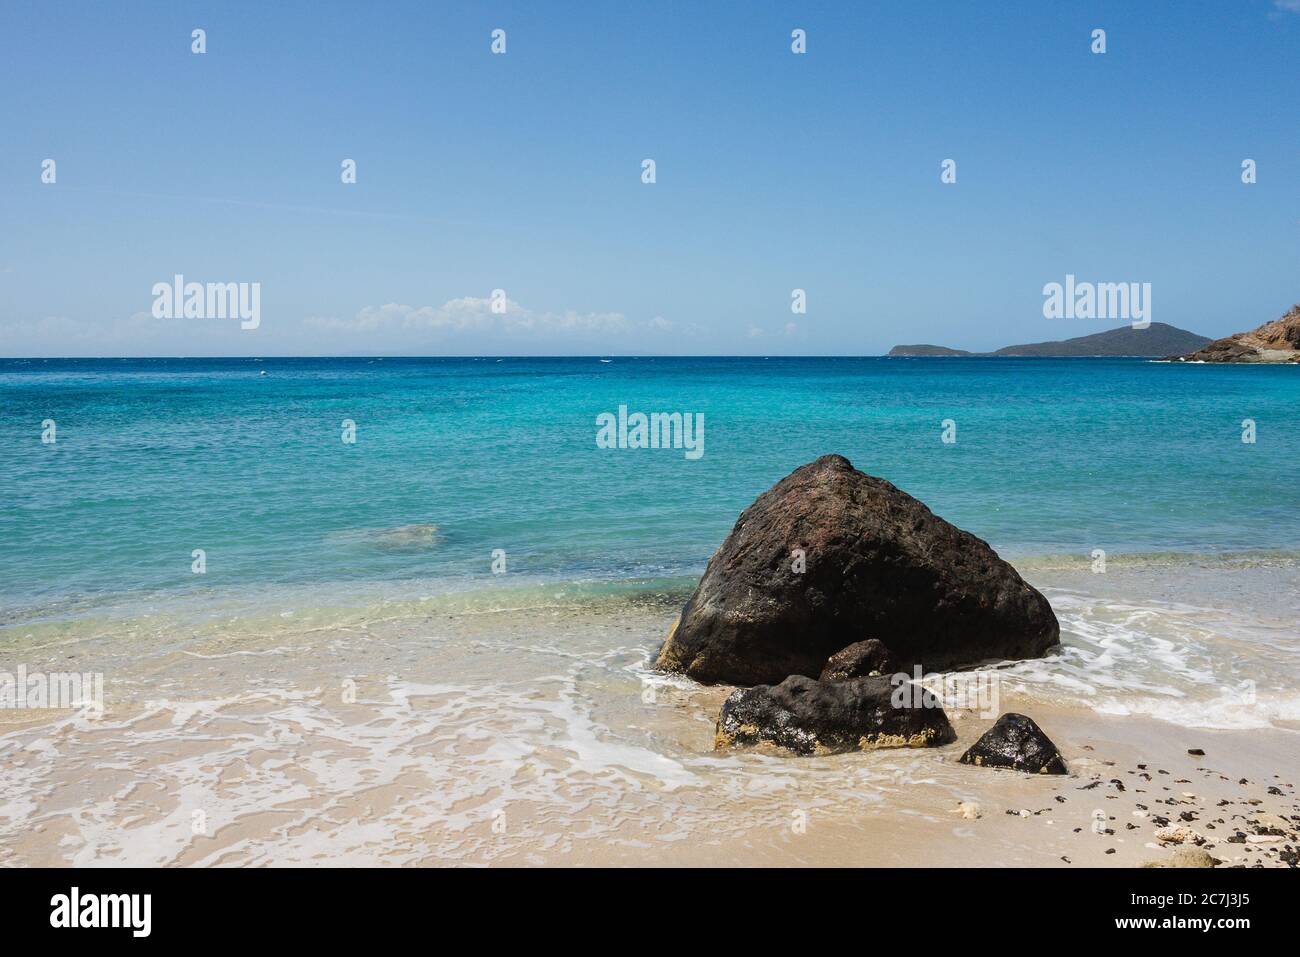 View of the Caribbean Sea from Playa Soldado beach in Culebra, Puerto Rico Stock Photo